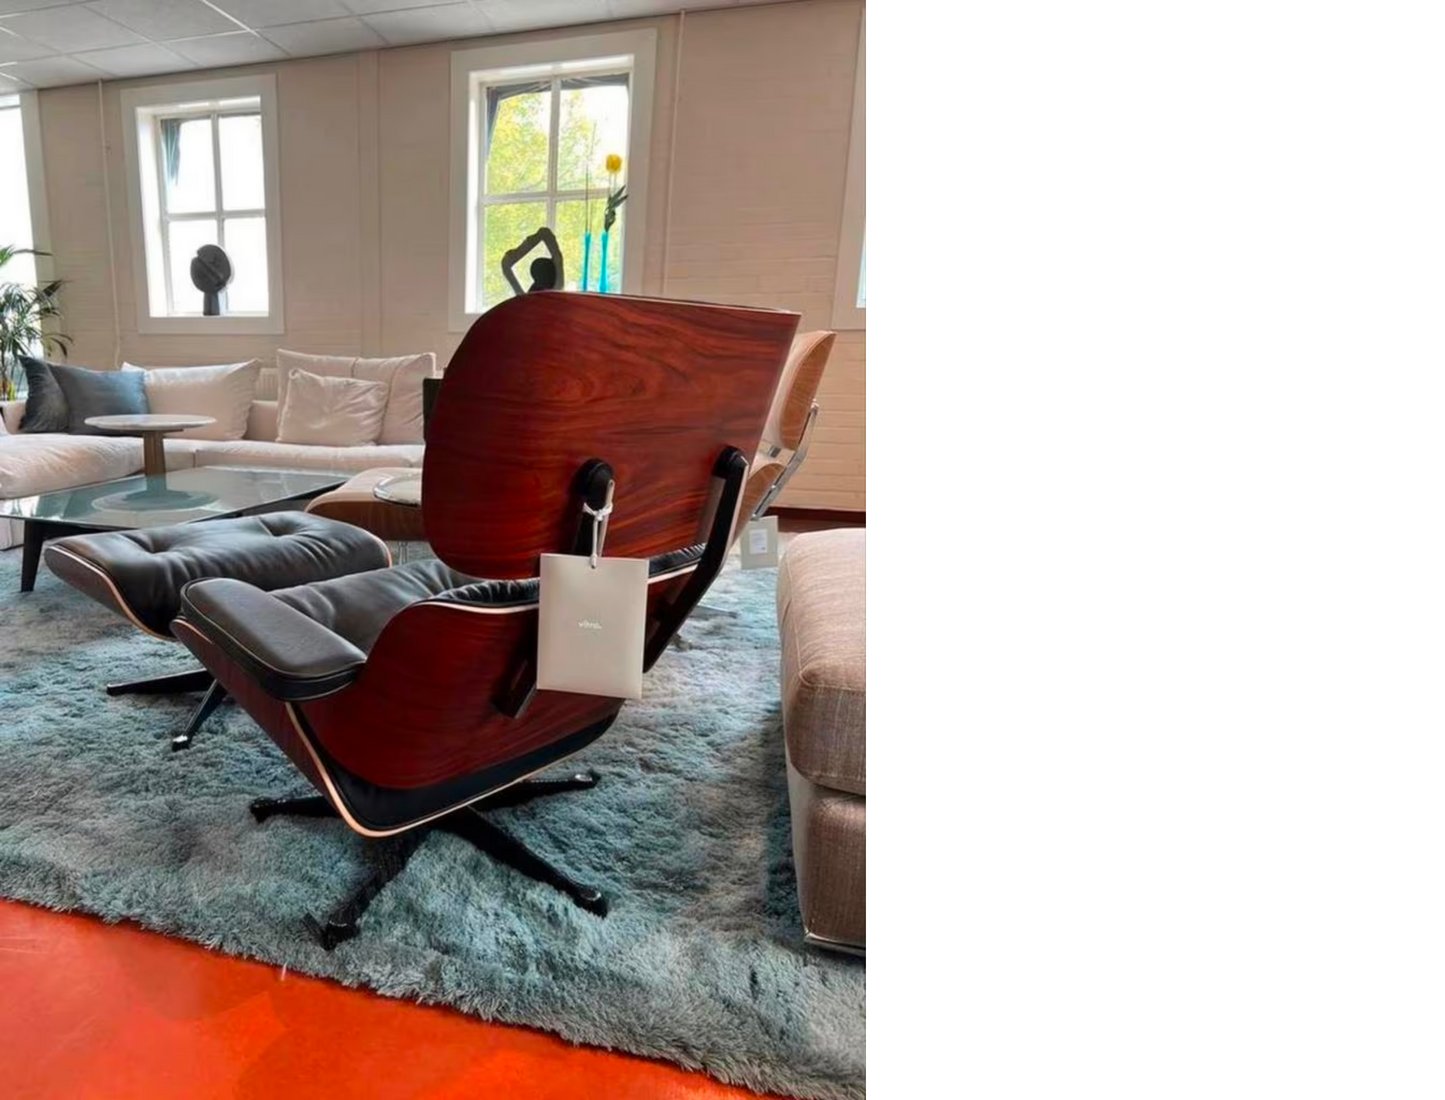 New Vitra XL Lounge Chair + Ottoman Palisander week 17-2023